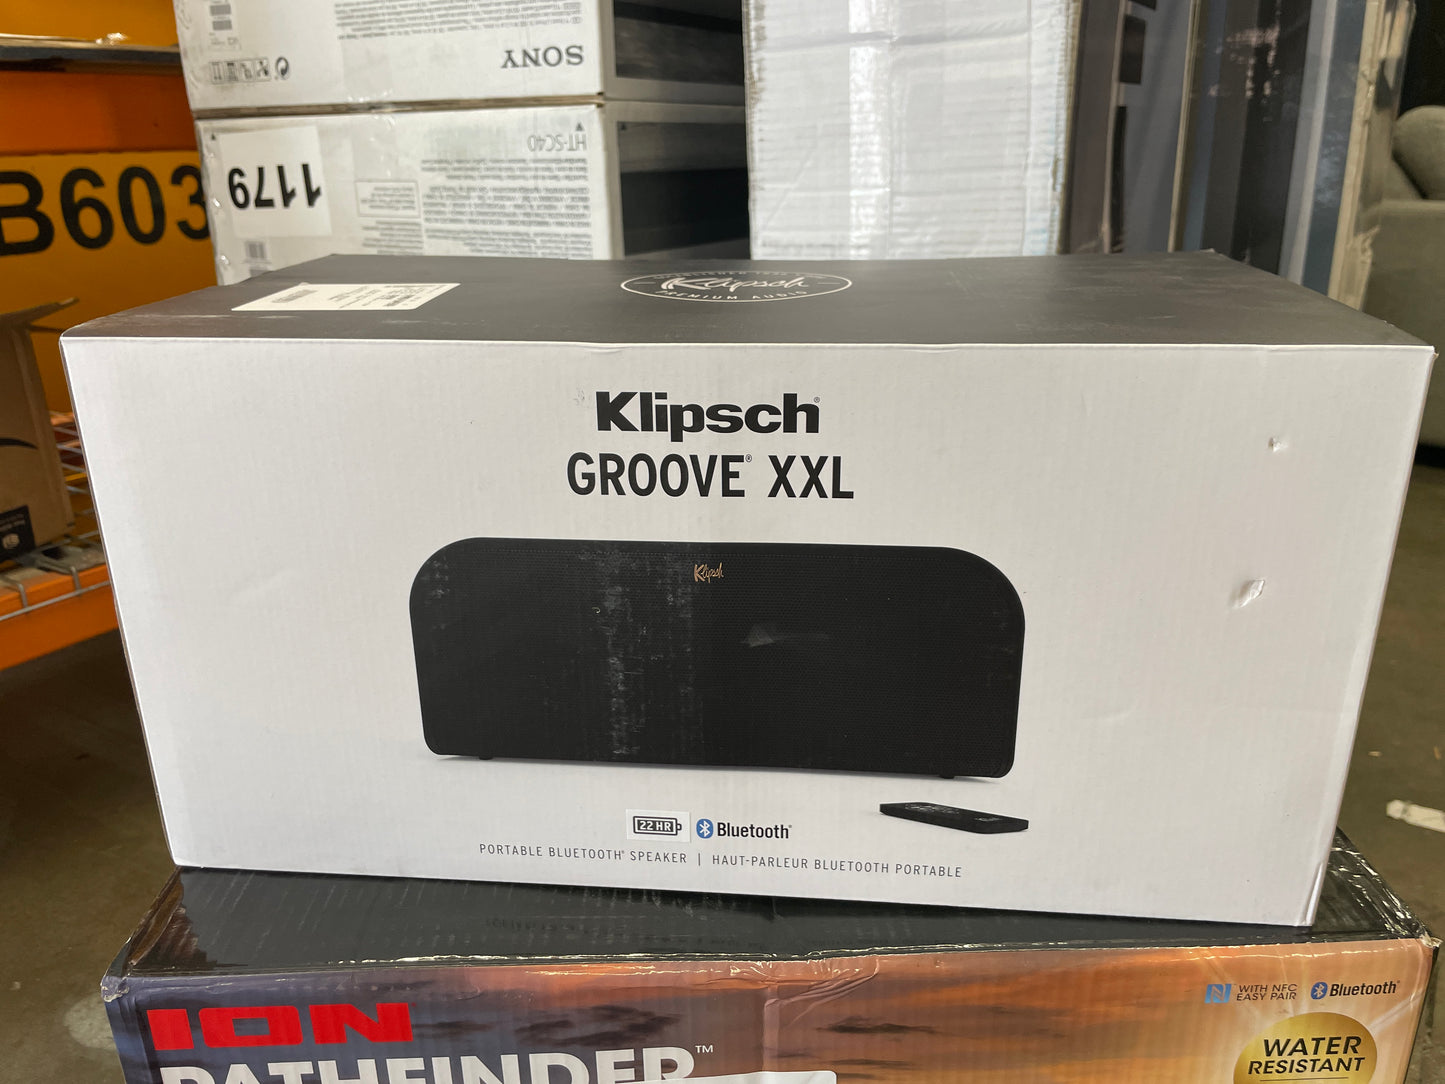 Like NEW - Klipsch Groove XXL Portable Bluetooth Speaker - Retail $349